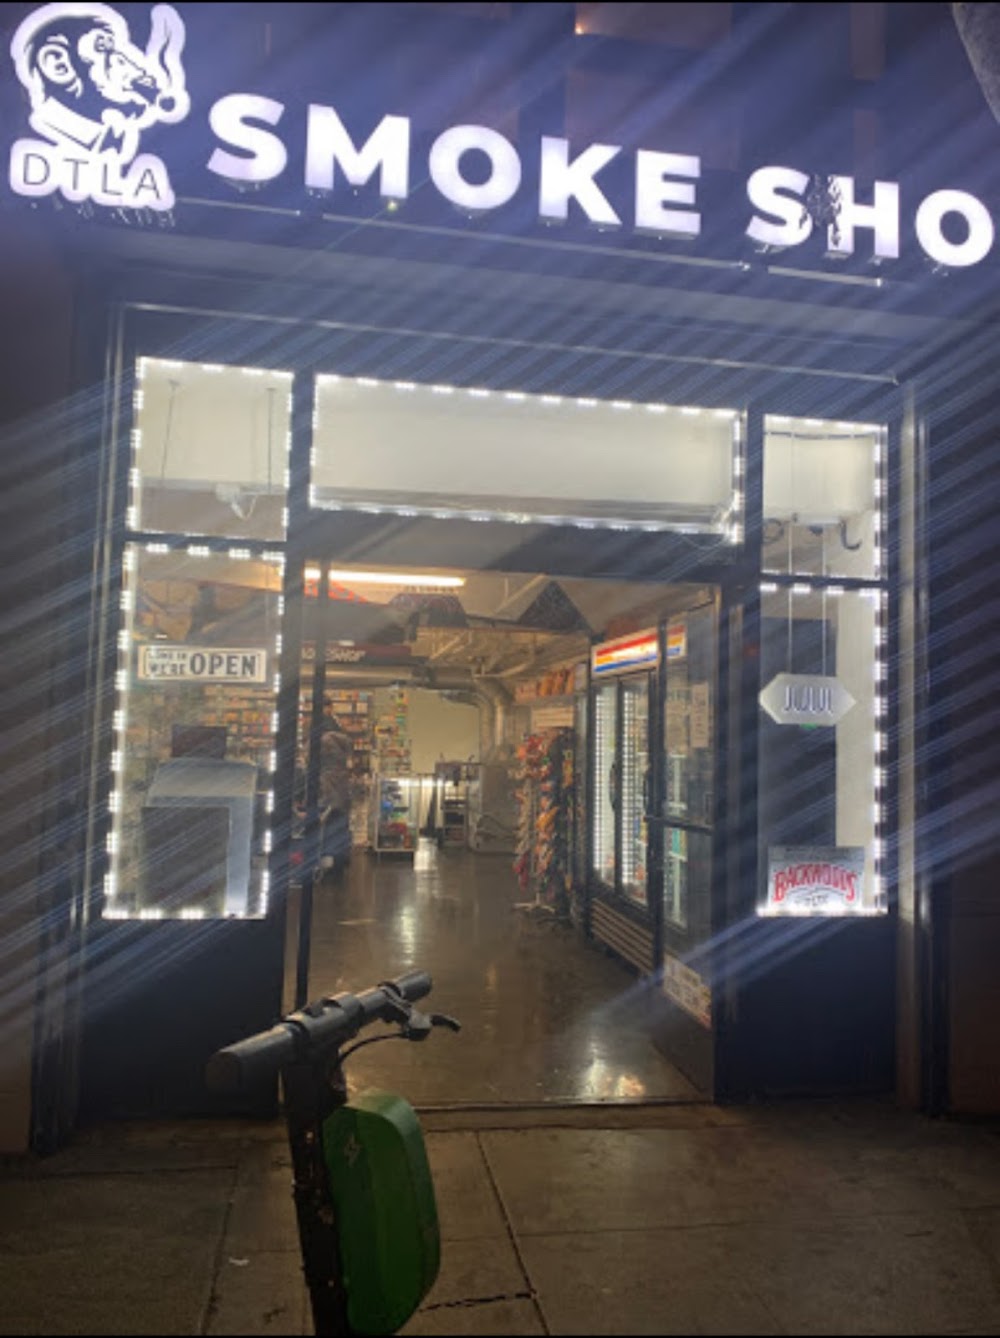 DTLA Smoke Shop